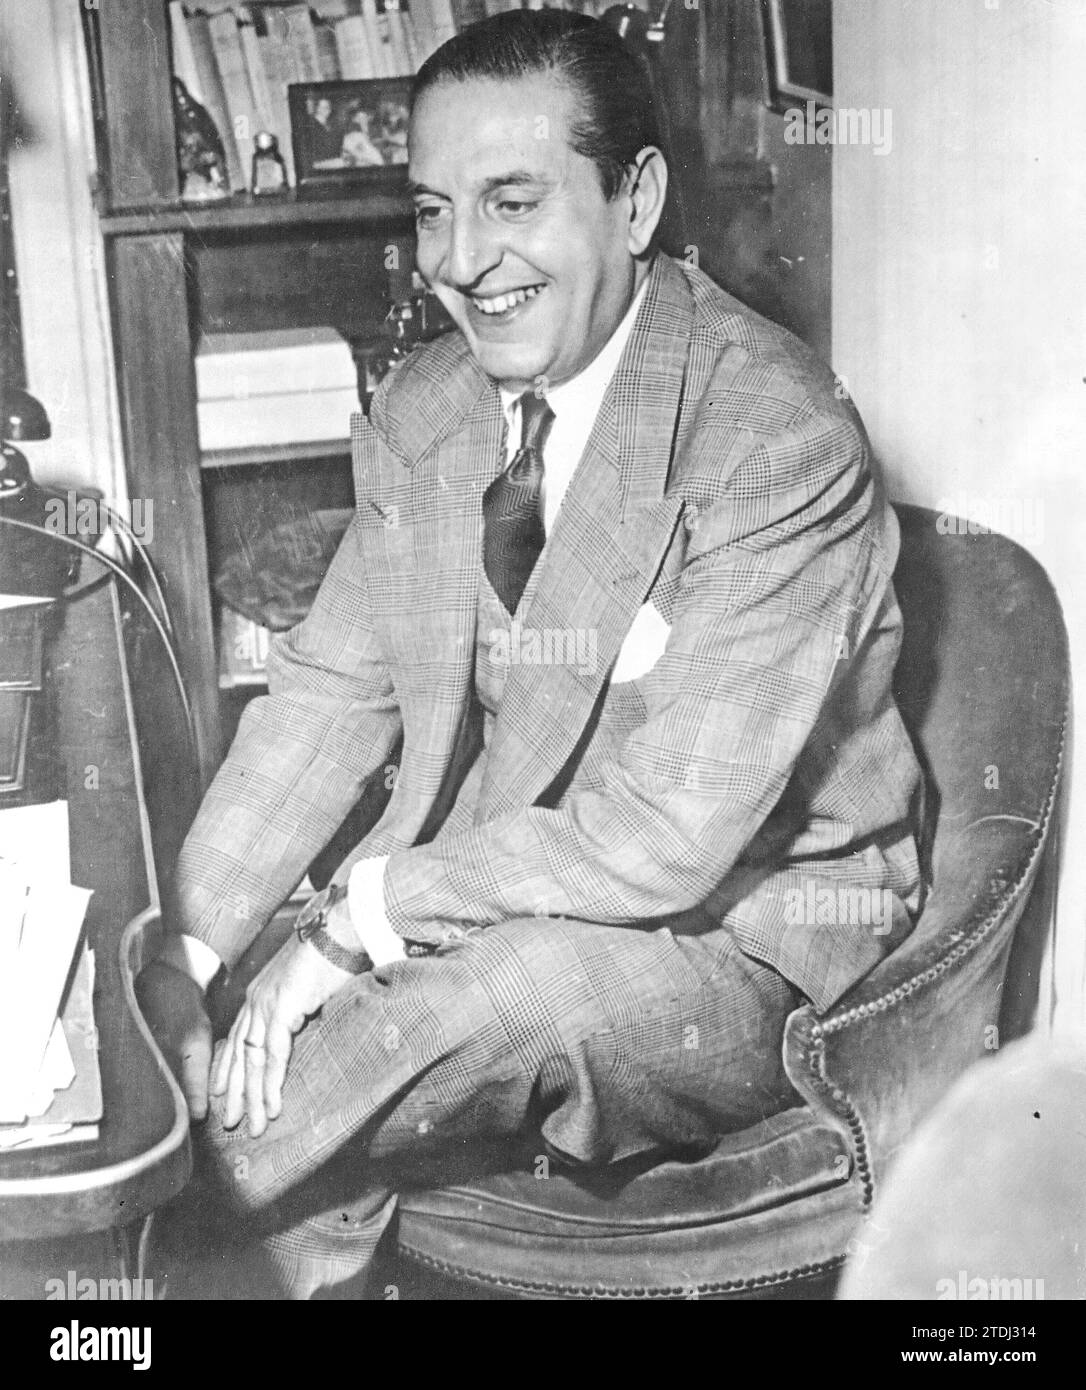 12/31/1953. Joaquín Calvo Sotelo at his work table. Credit: Album / Archivo ABC / Antonio Stock Photo